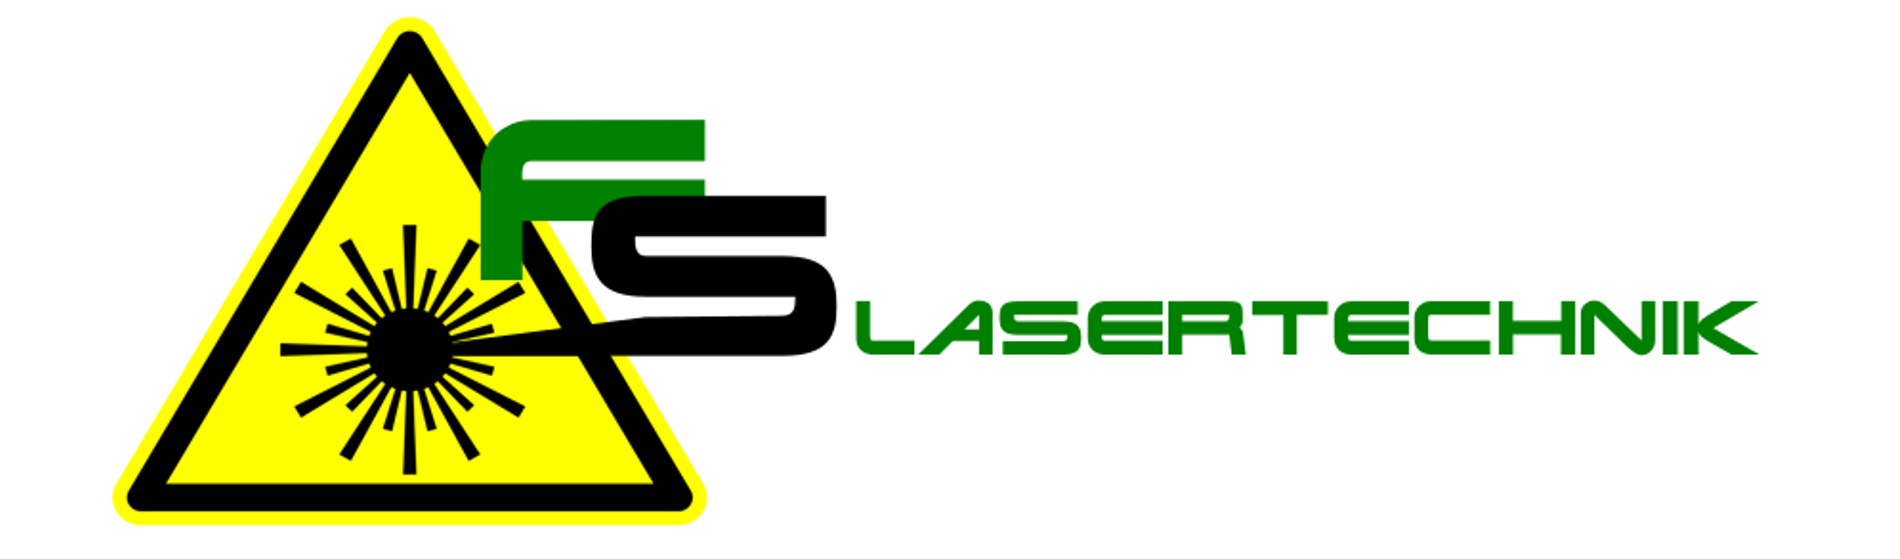 FS-Lasertechnik